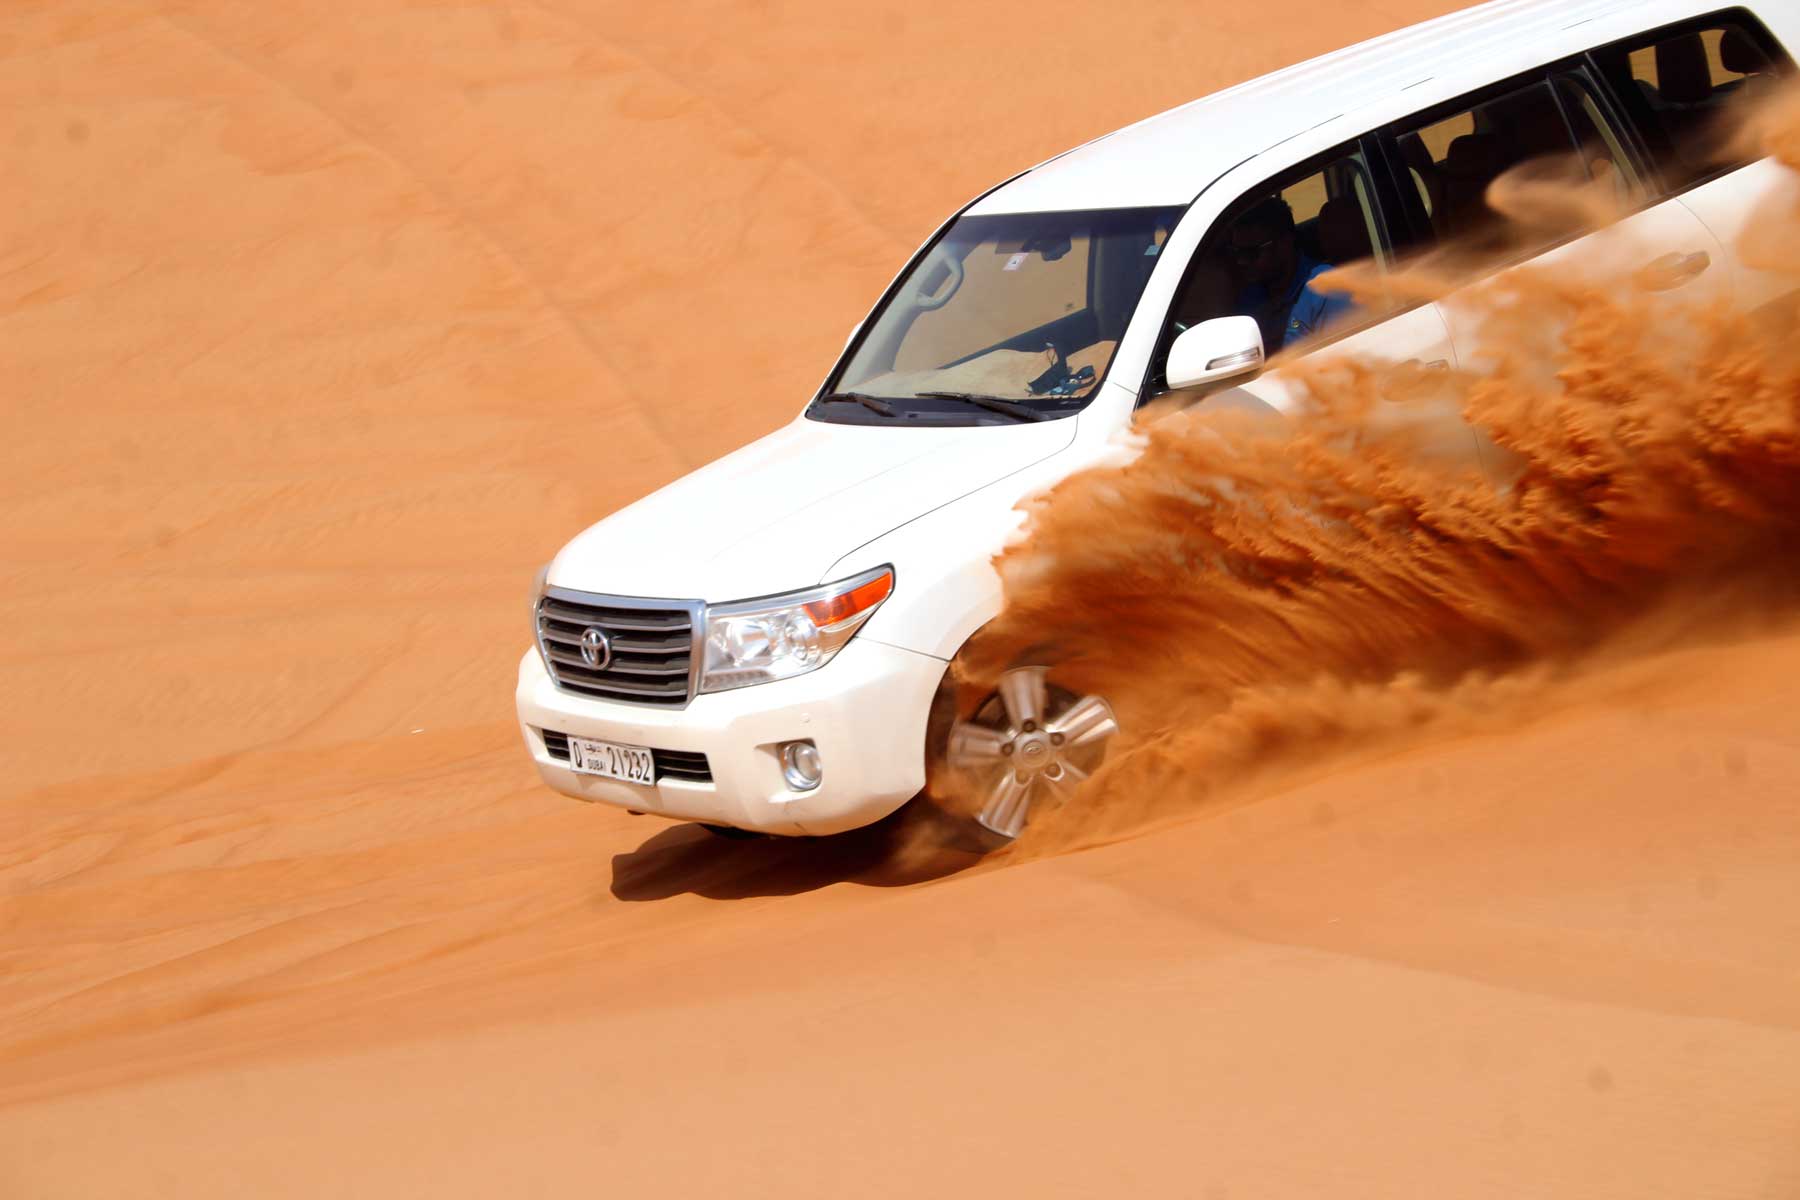 Dubai Desert Safari with Combo Offer 4in1 Desert Safari Tour Adventure with ATV Quad Biking